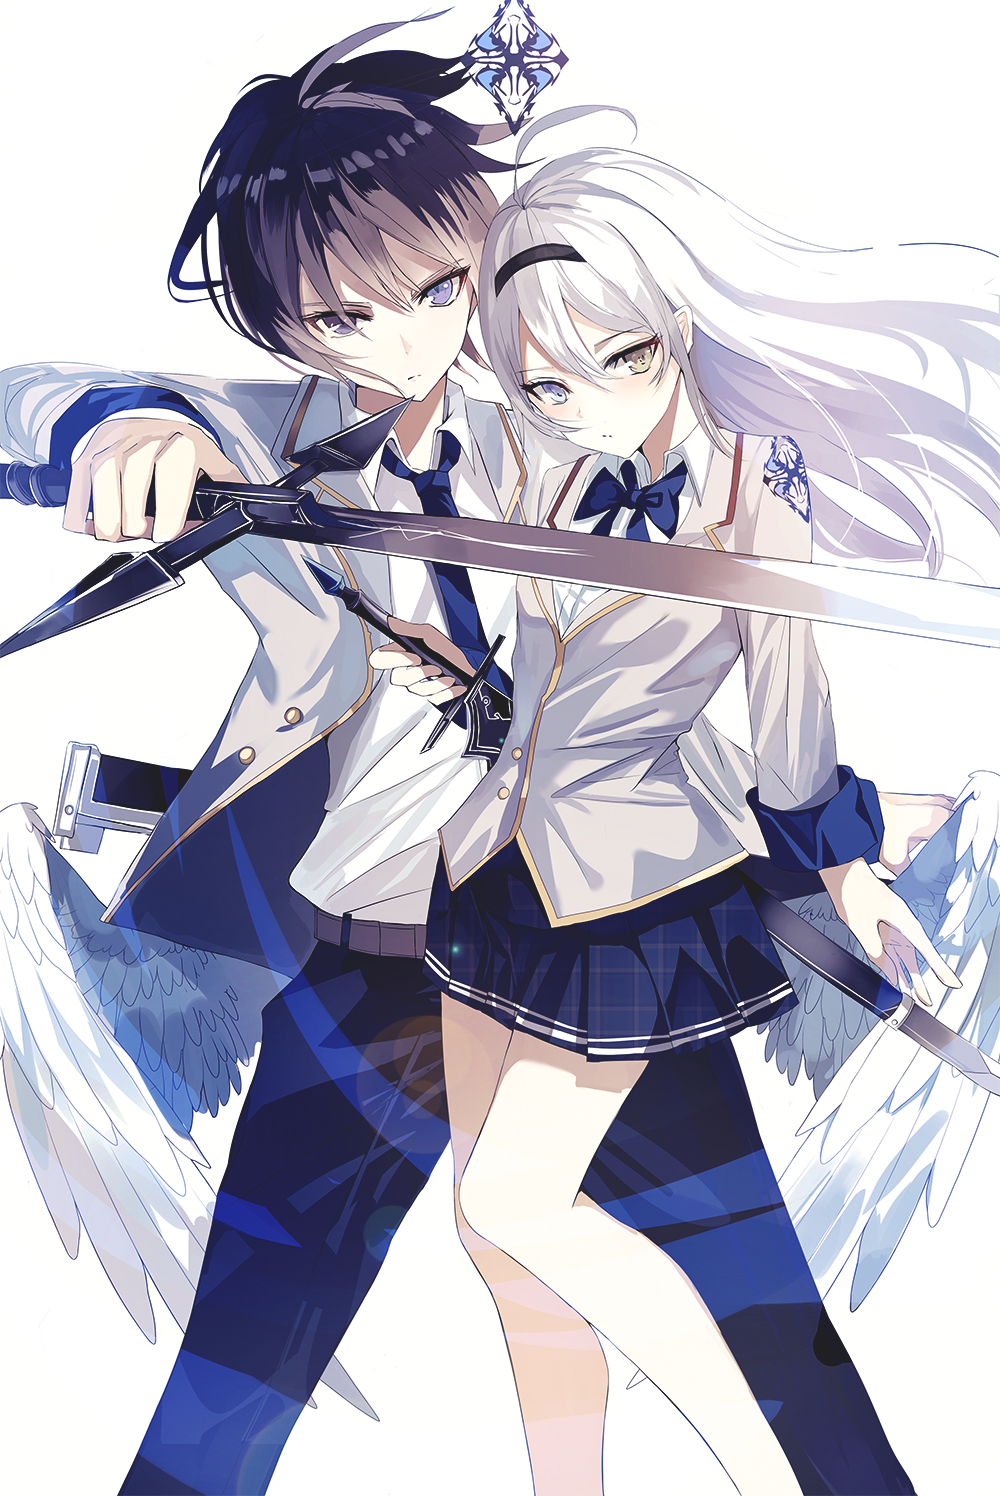 Anime 1000x1496 anime digital art artwork 2D portrait display Greennight school uniform sword wings anime girls anime boys